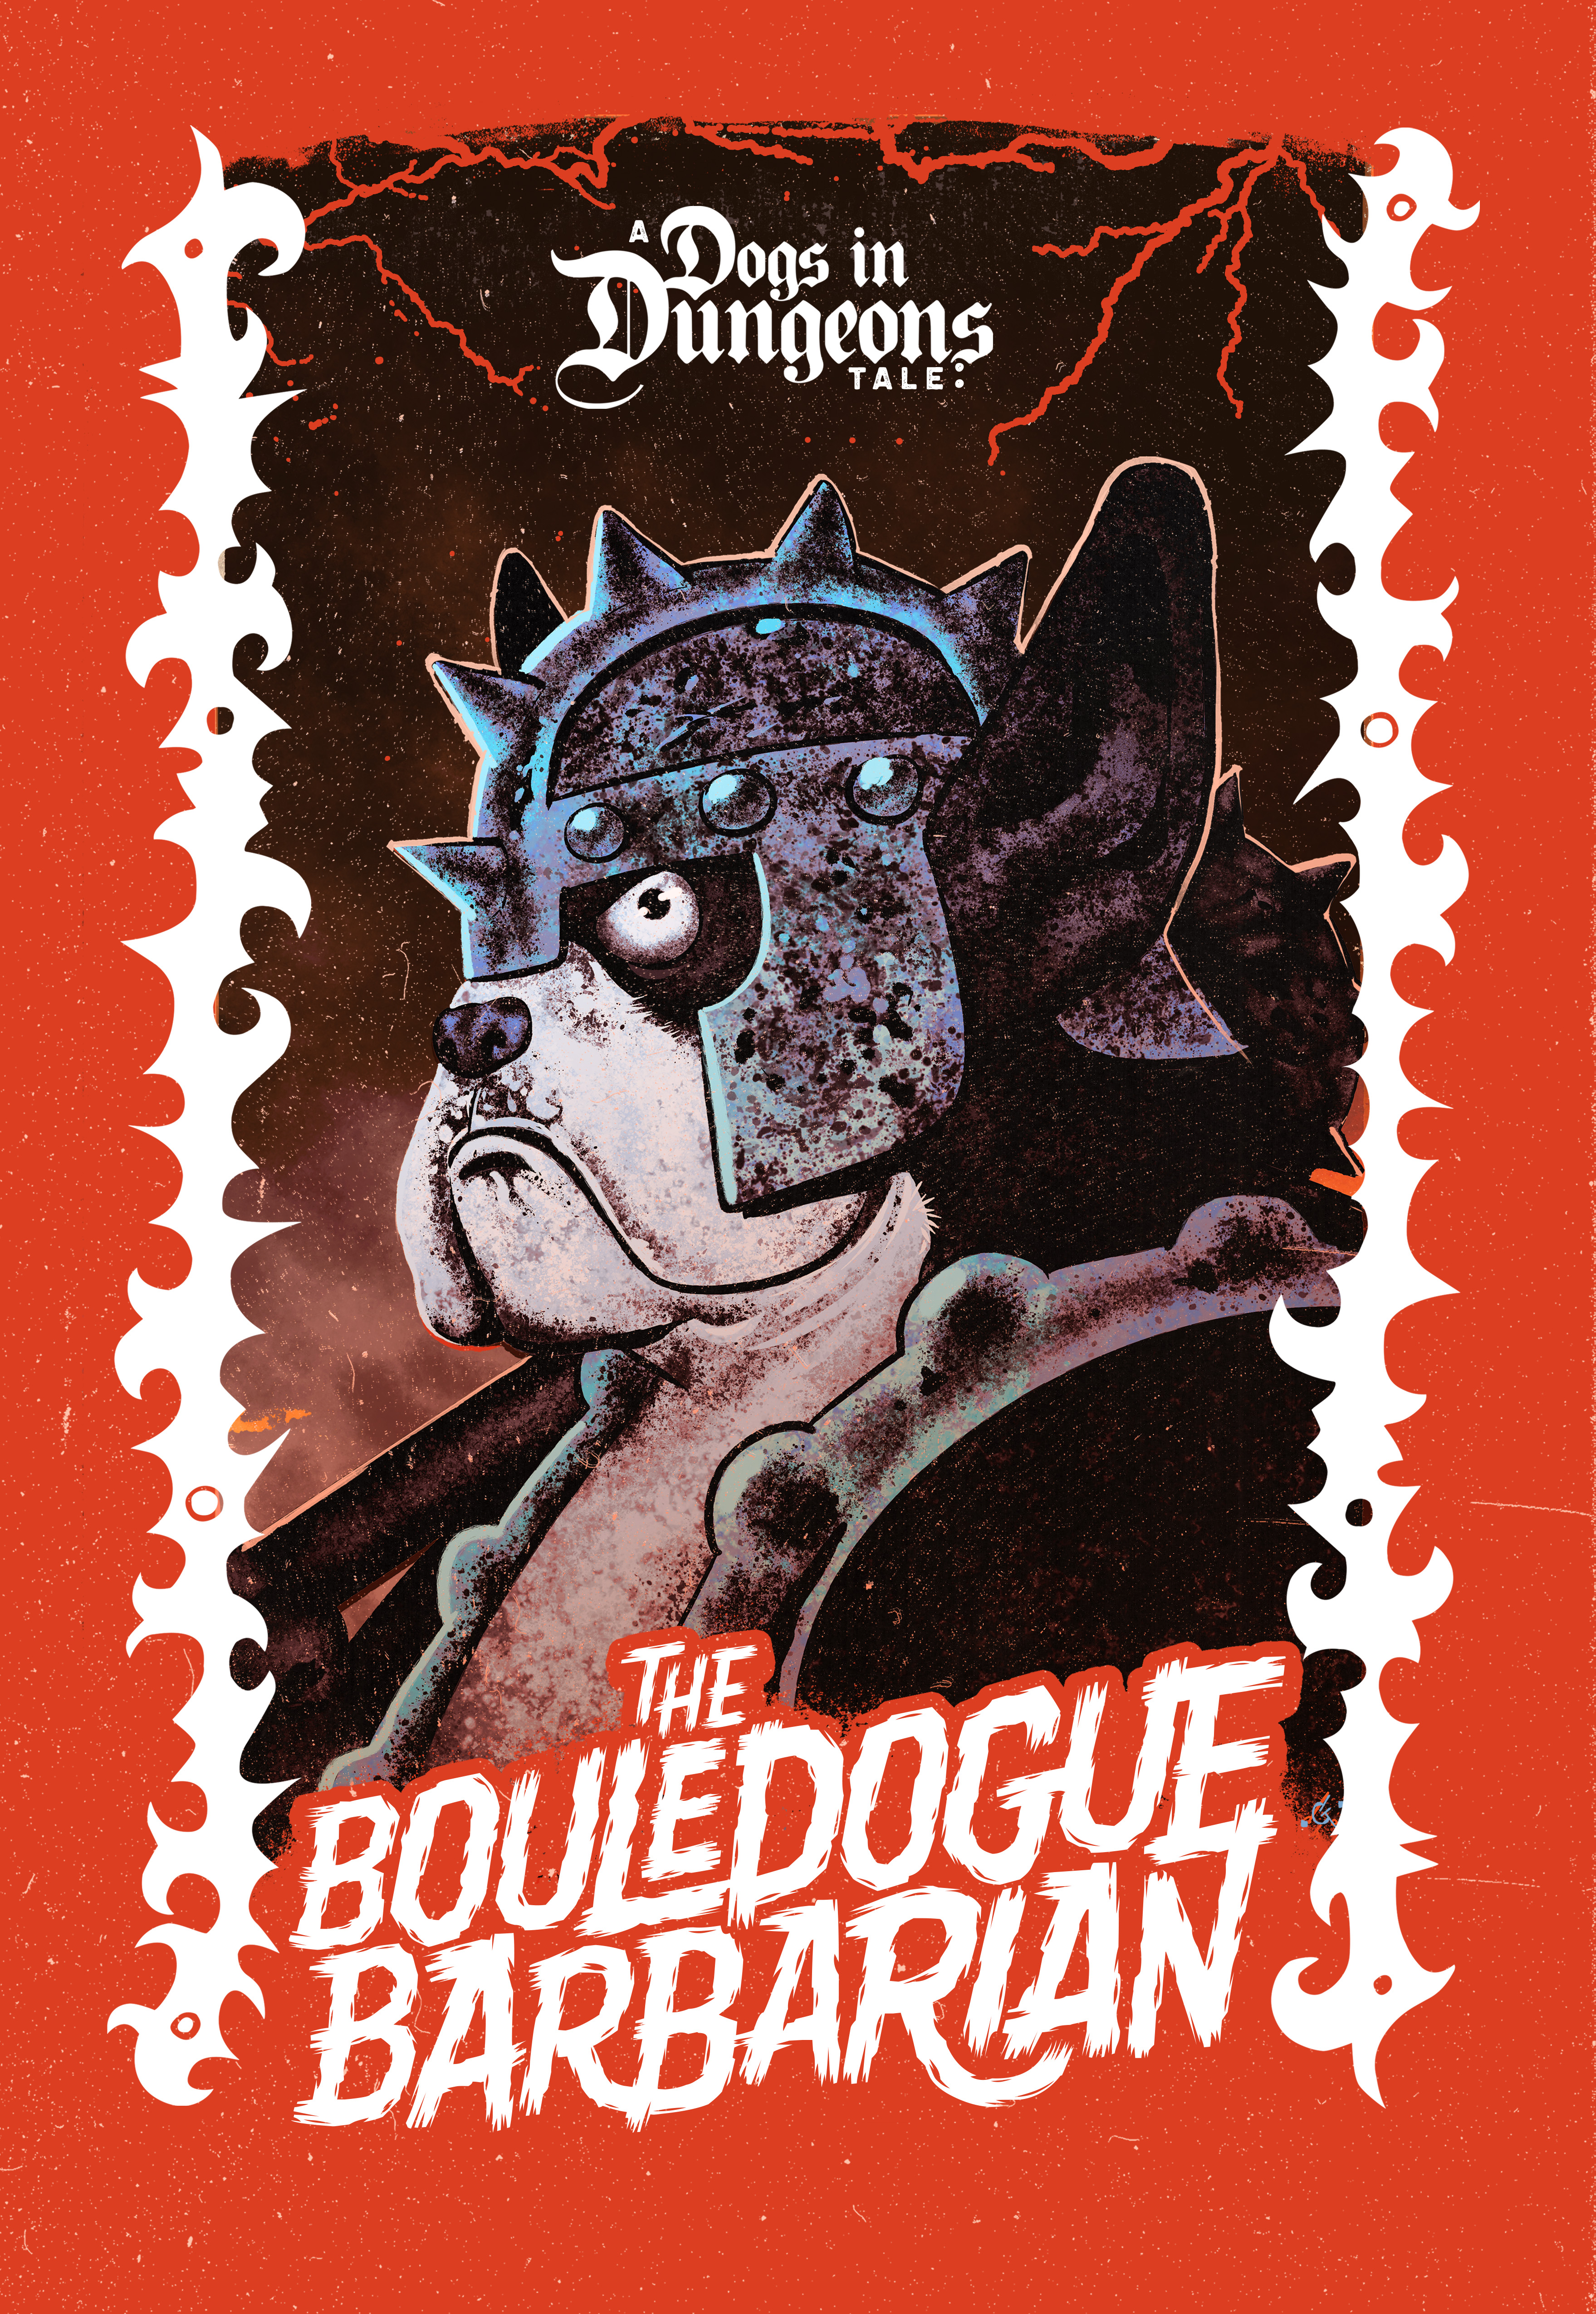 Bouledogue Barbarian Graphic Novel (Mature)